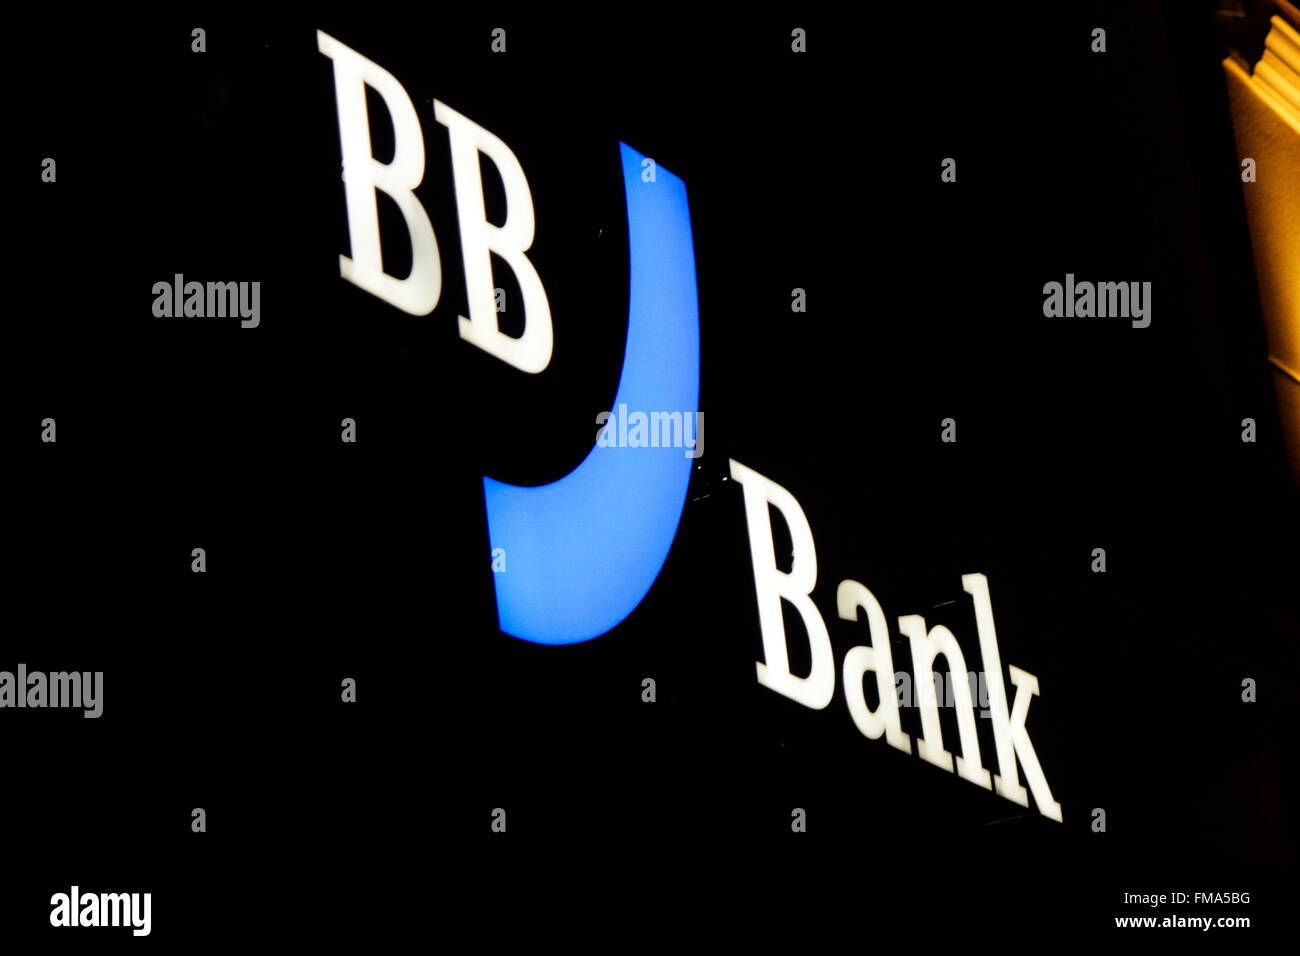 Markenname: 'BB Bank', Dezember 2013, Berlin. Stock Photo